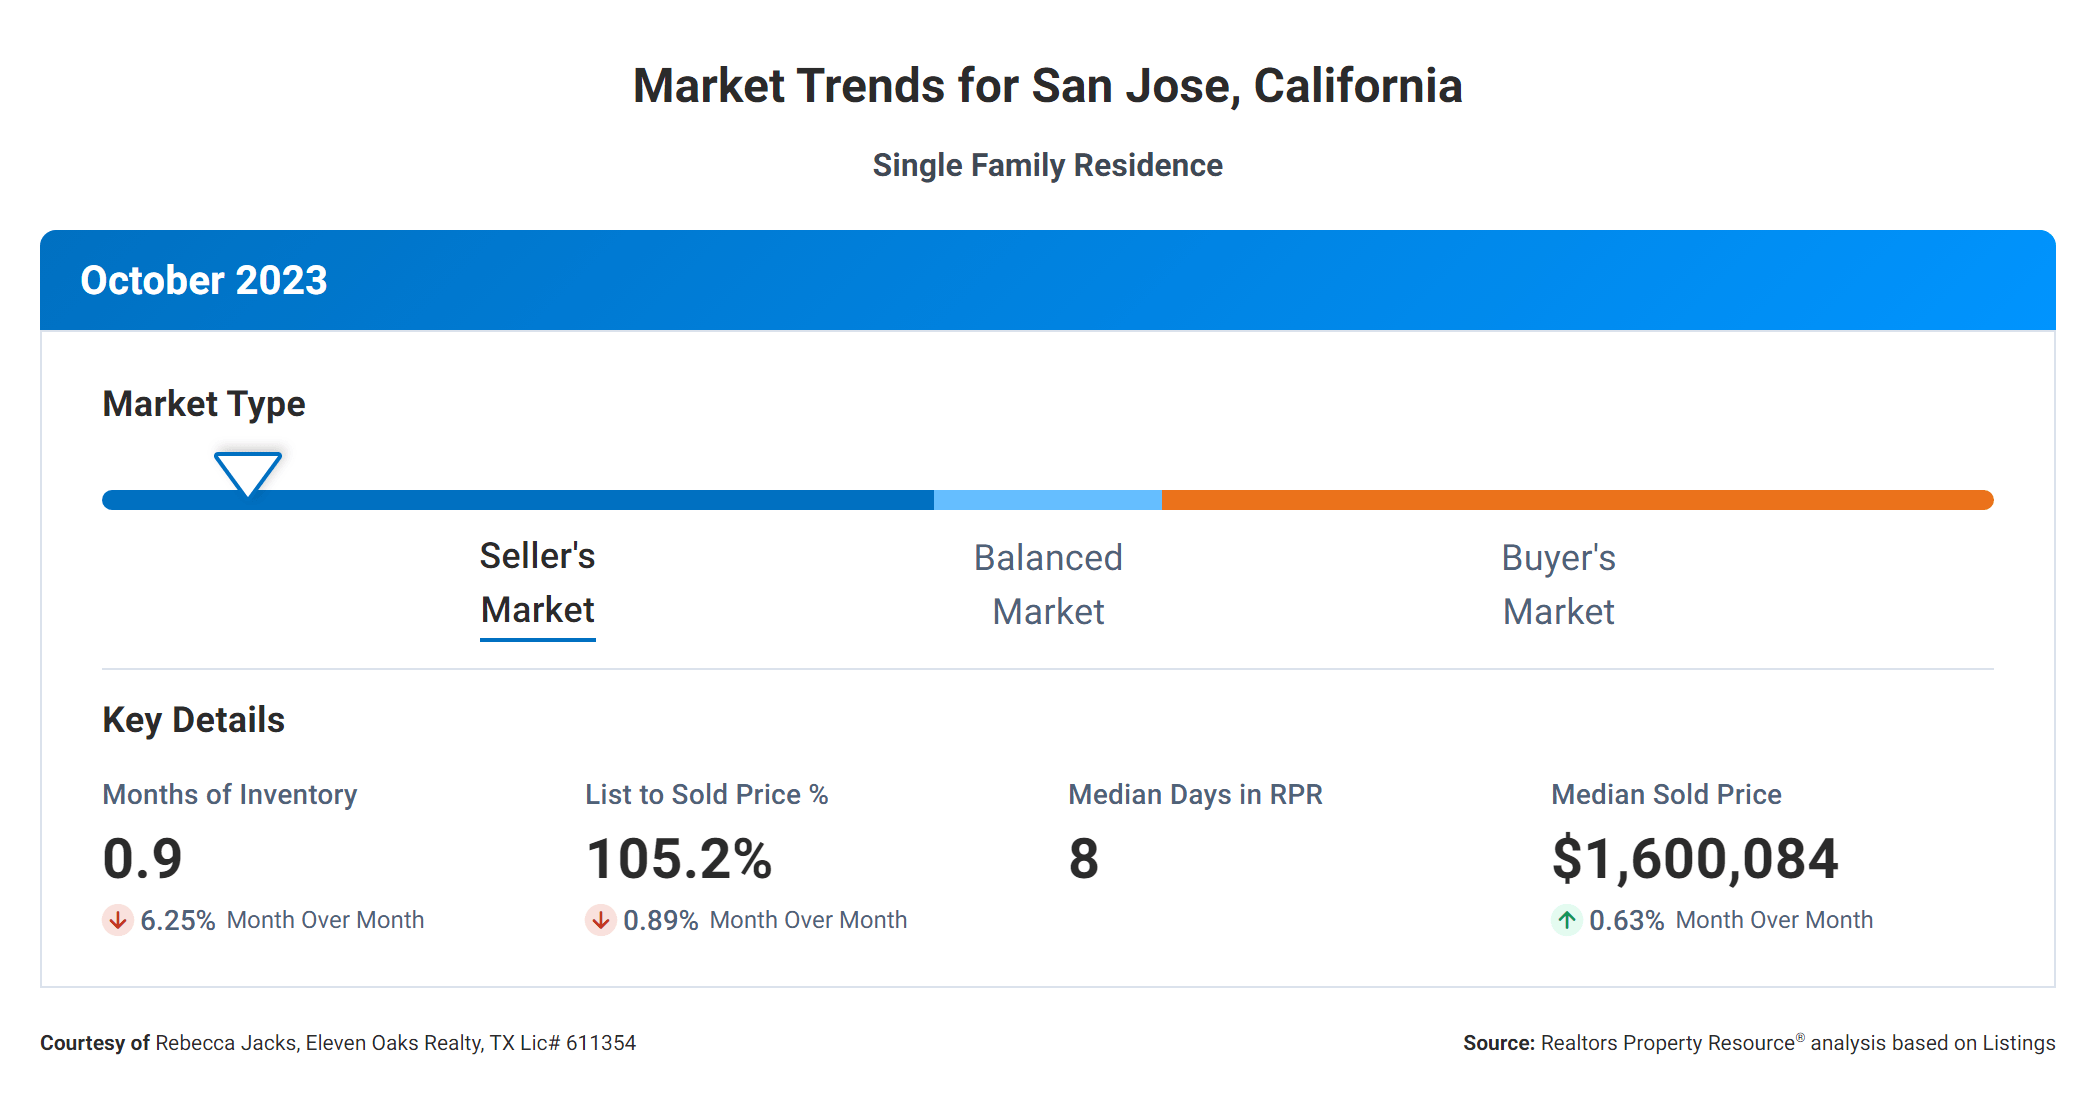 October 2023 market trends for San Jose California